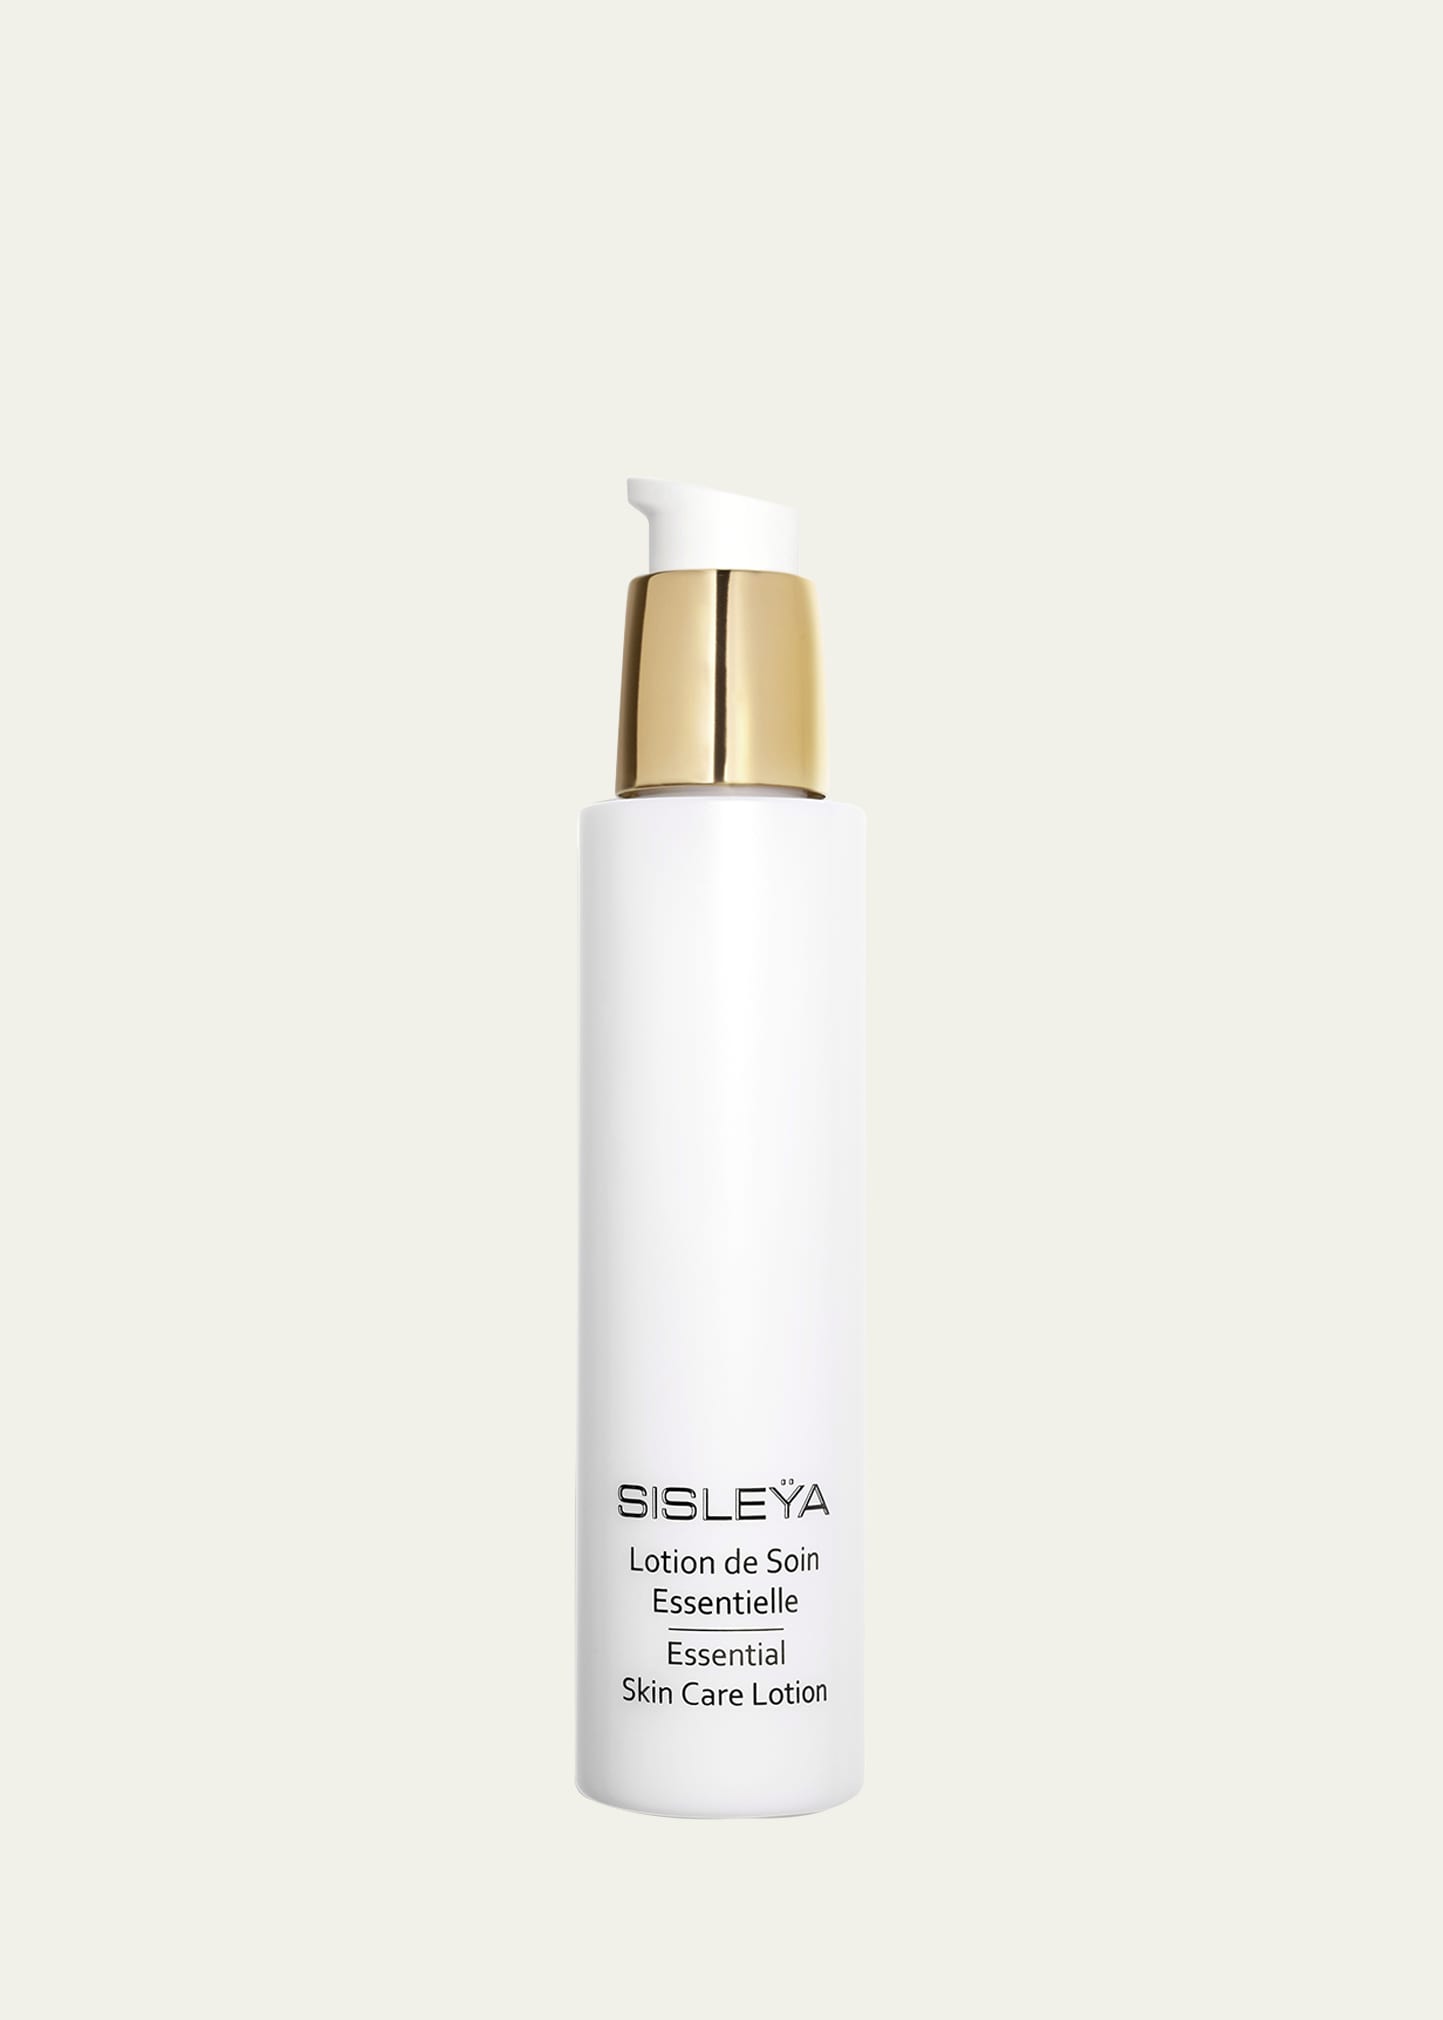 Sisley-Paris SisleØa Essential Skin Care Lotion, 5.0 oz. - Bergdorf Goodman